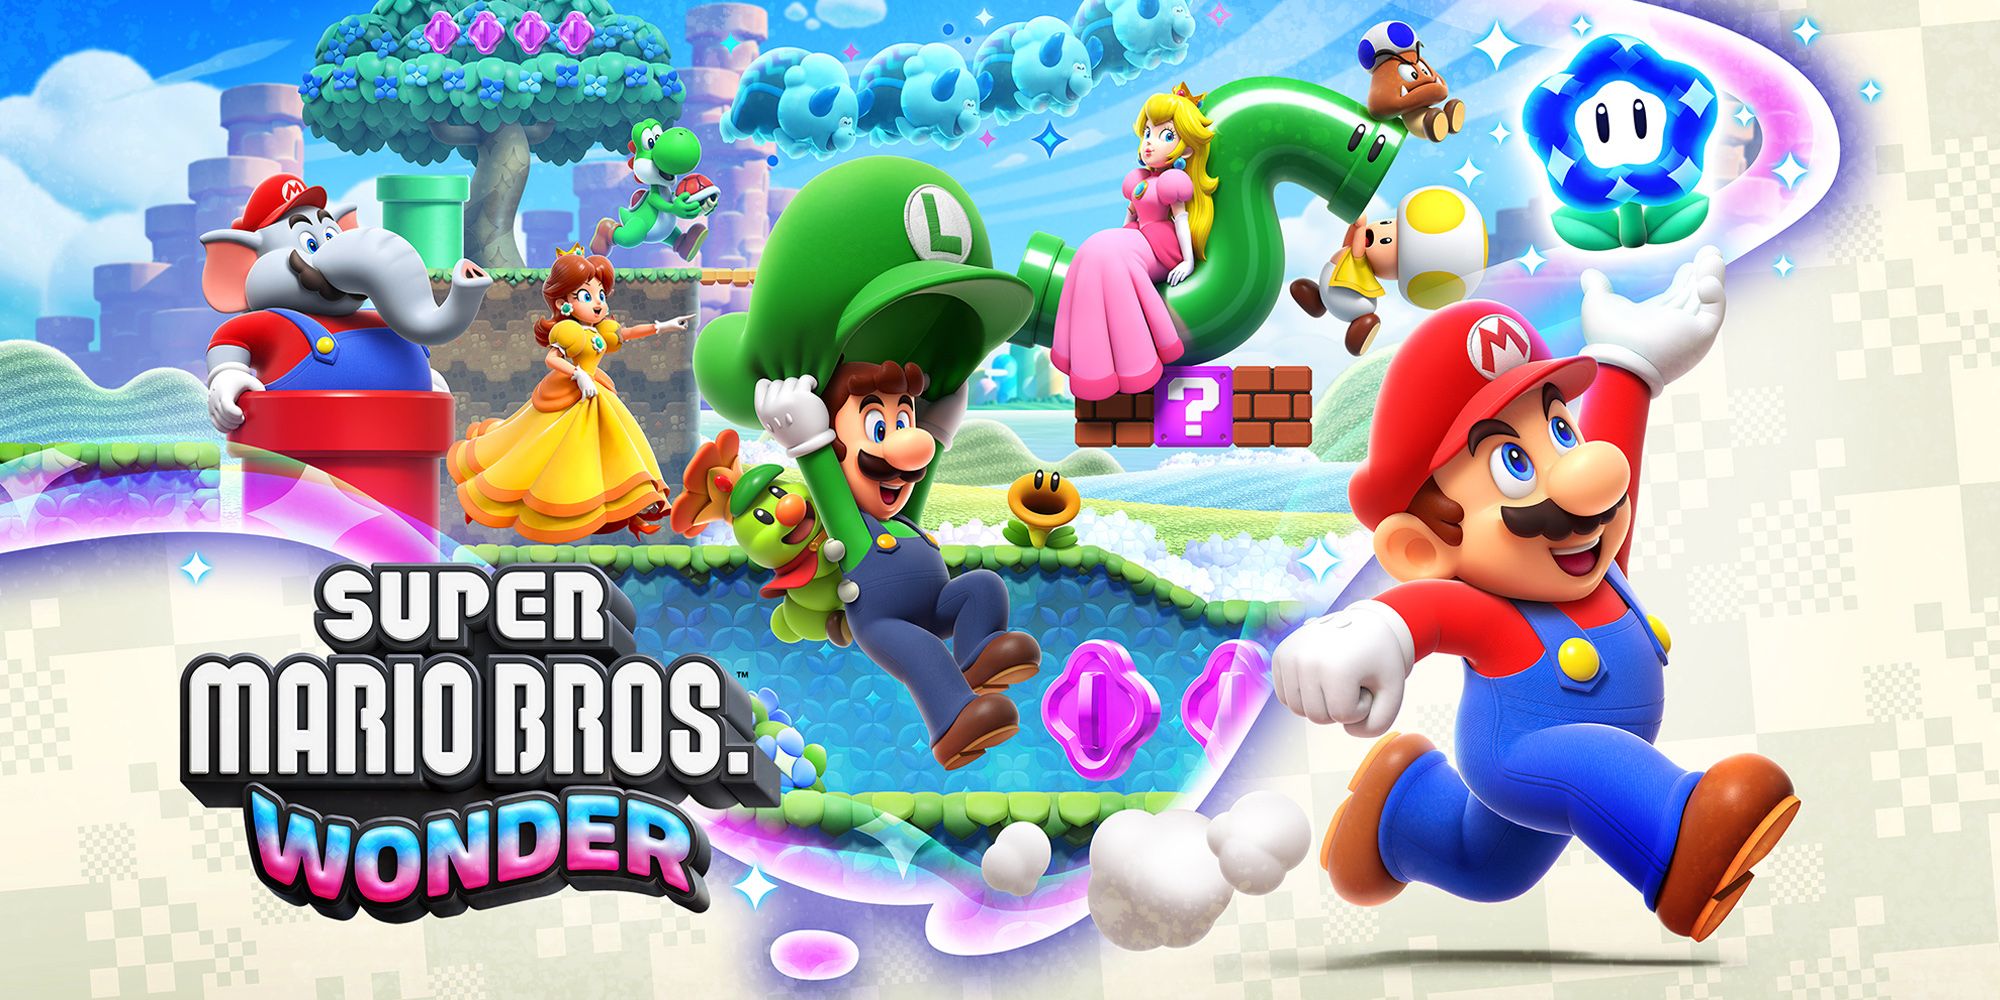 Mario, Luigi, Daisy, Peach, and Elephant Mario with the Super Mario Bros. Wonder logo.